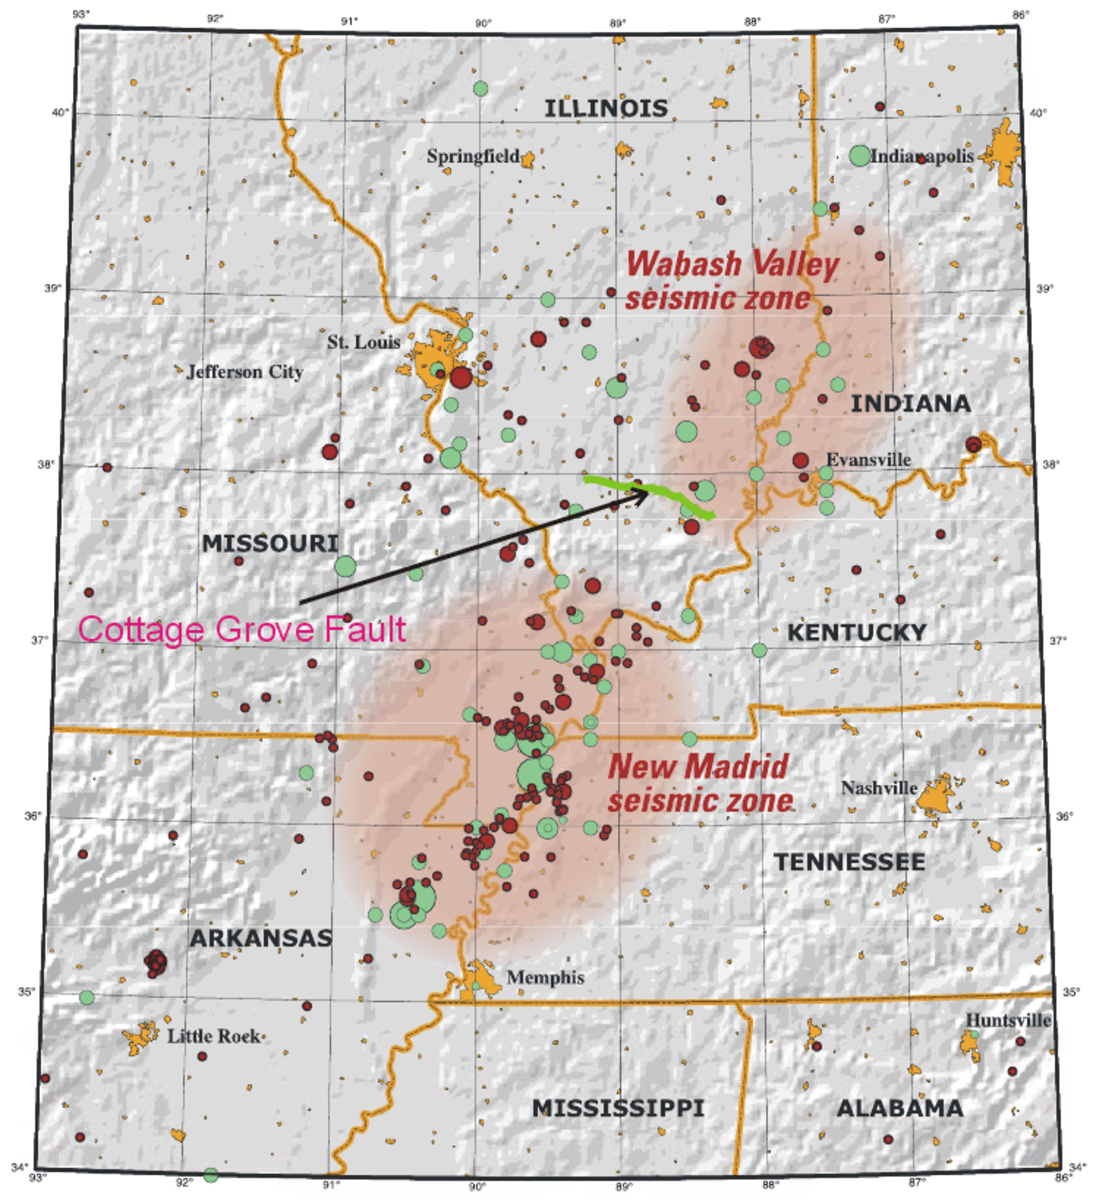 New Madrid and Wabash seismic zones